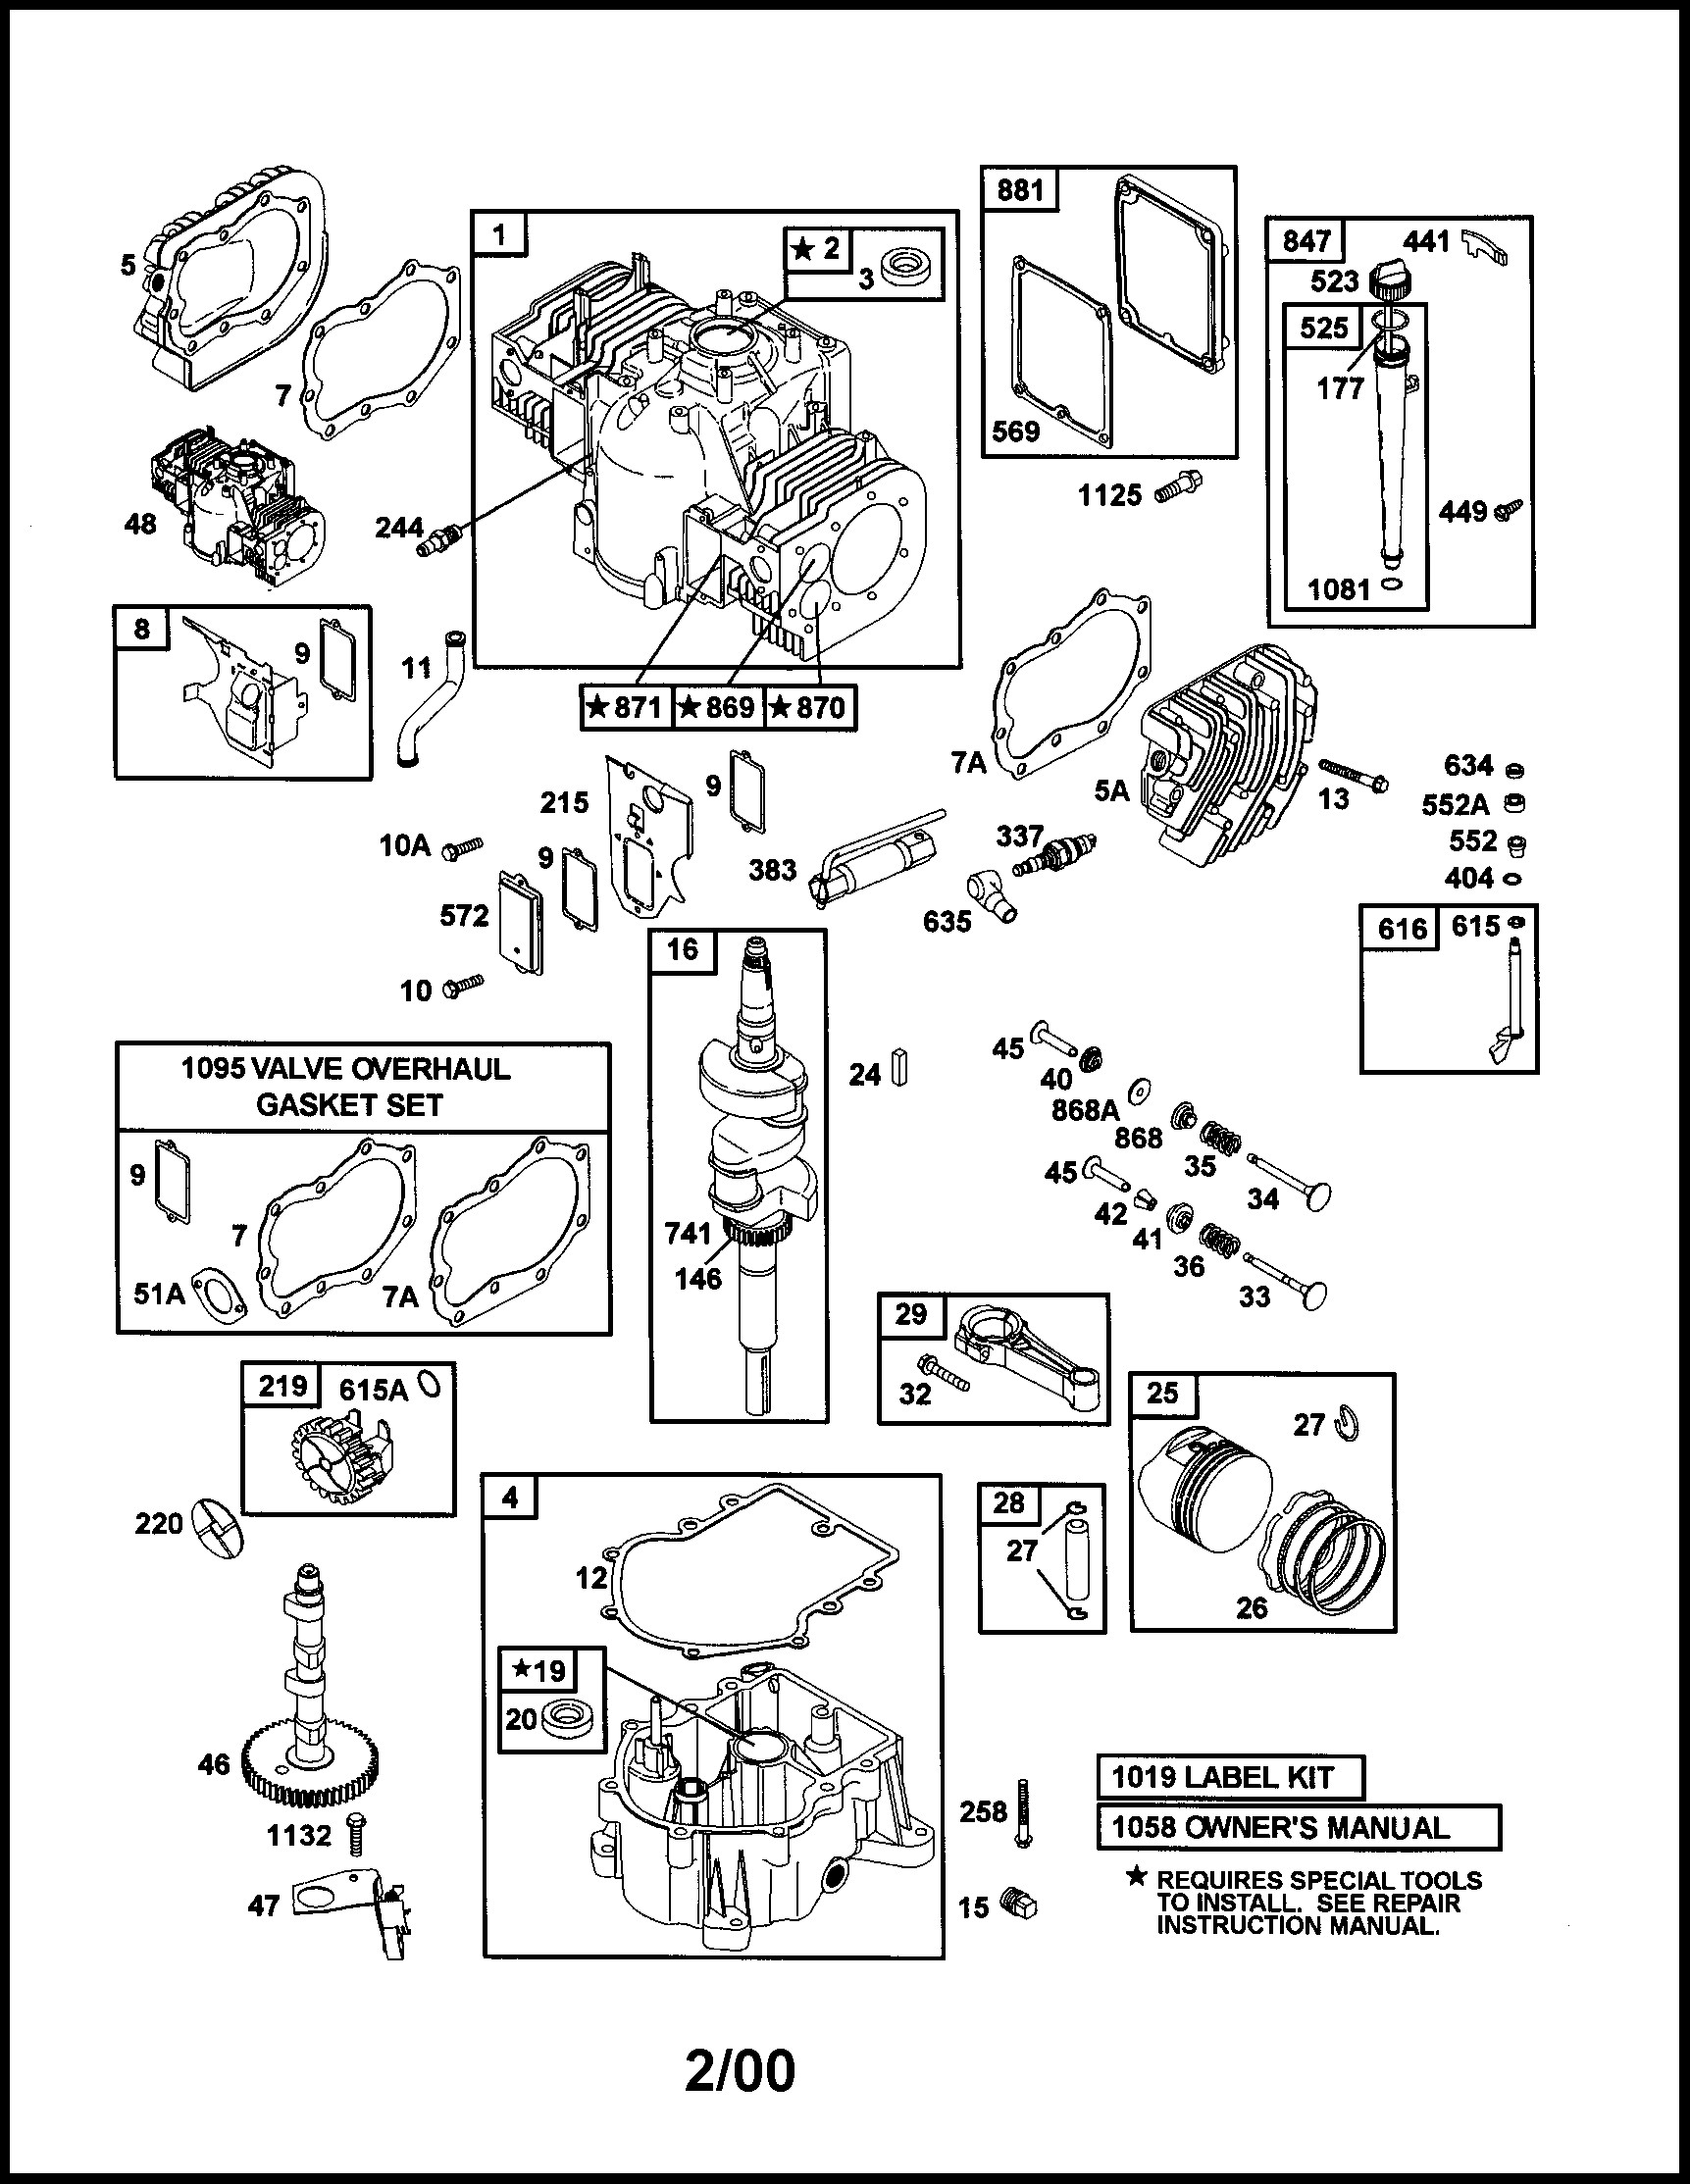 20 Hp Briggs And Stratton Engine Diagram